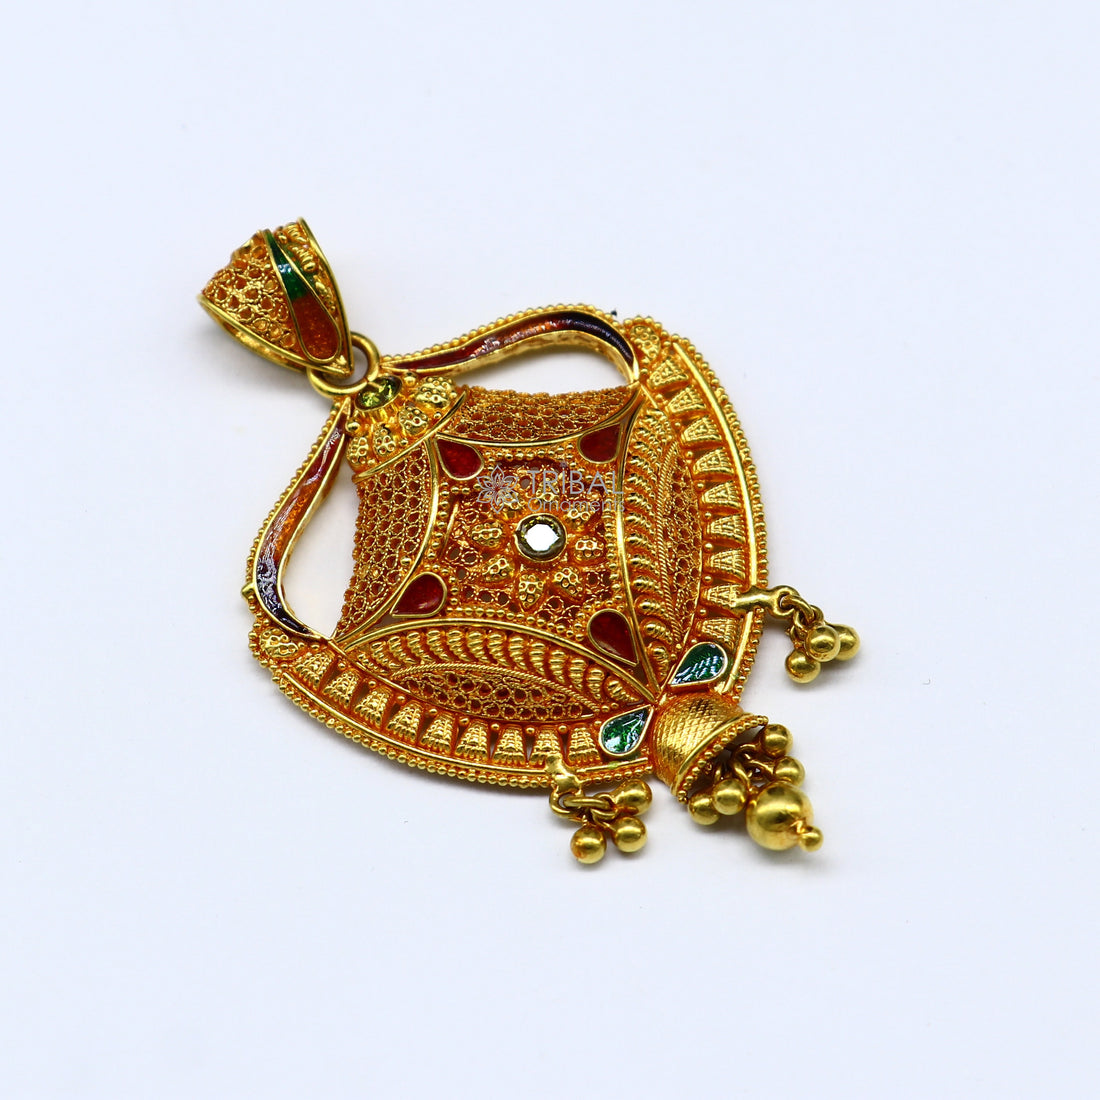 Traditional cultural filigree work trendy 22kt yellow gold handmade unique pendant, amazing ethnic brides pendant jewelry gp24 - TRIBAL ORNAMENTS